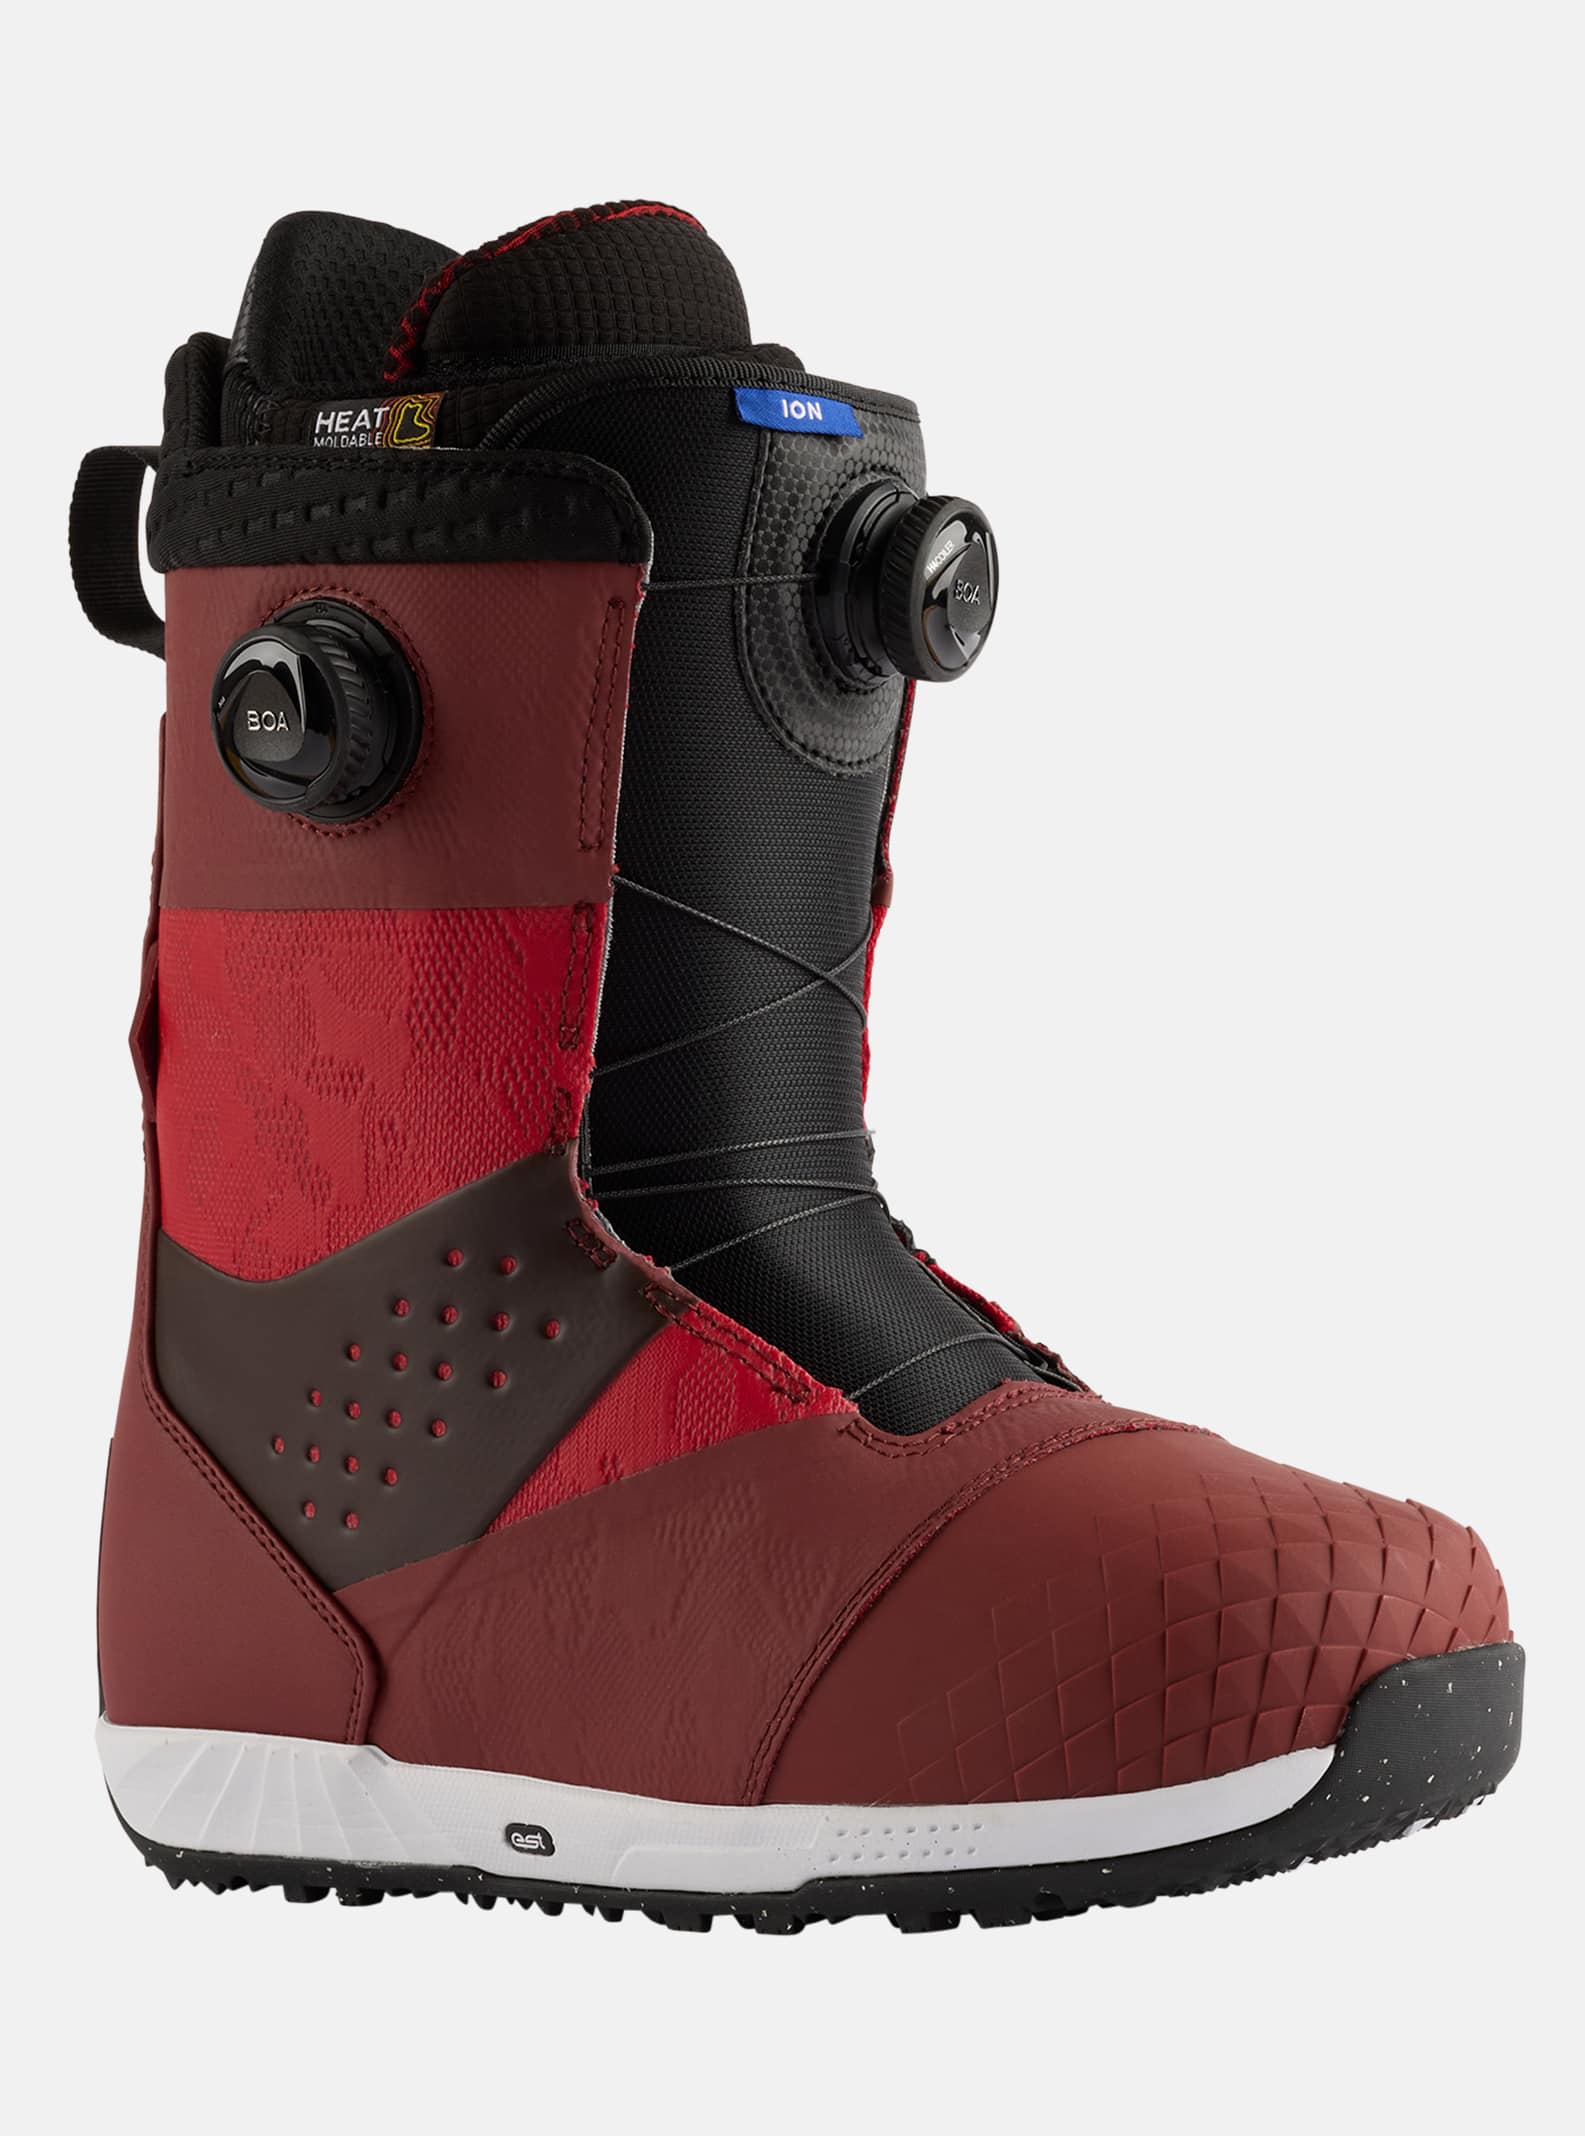 Burton - Boots de snowboard Ion BOA® homme, 9.0